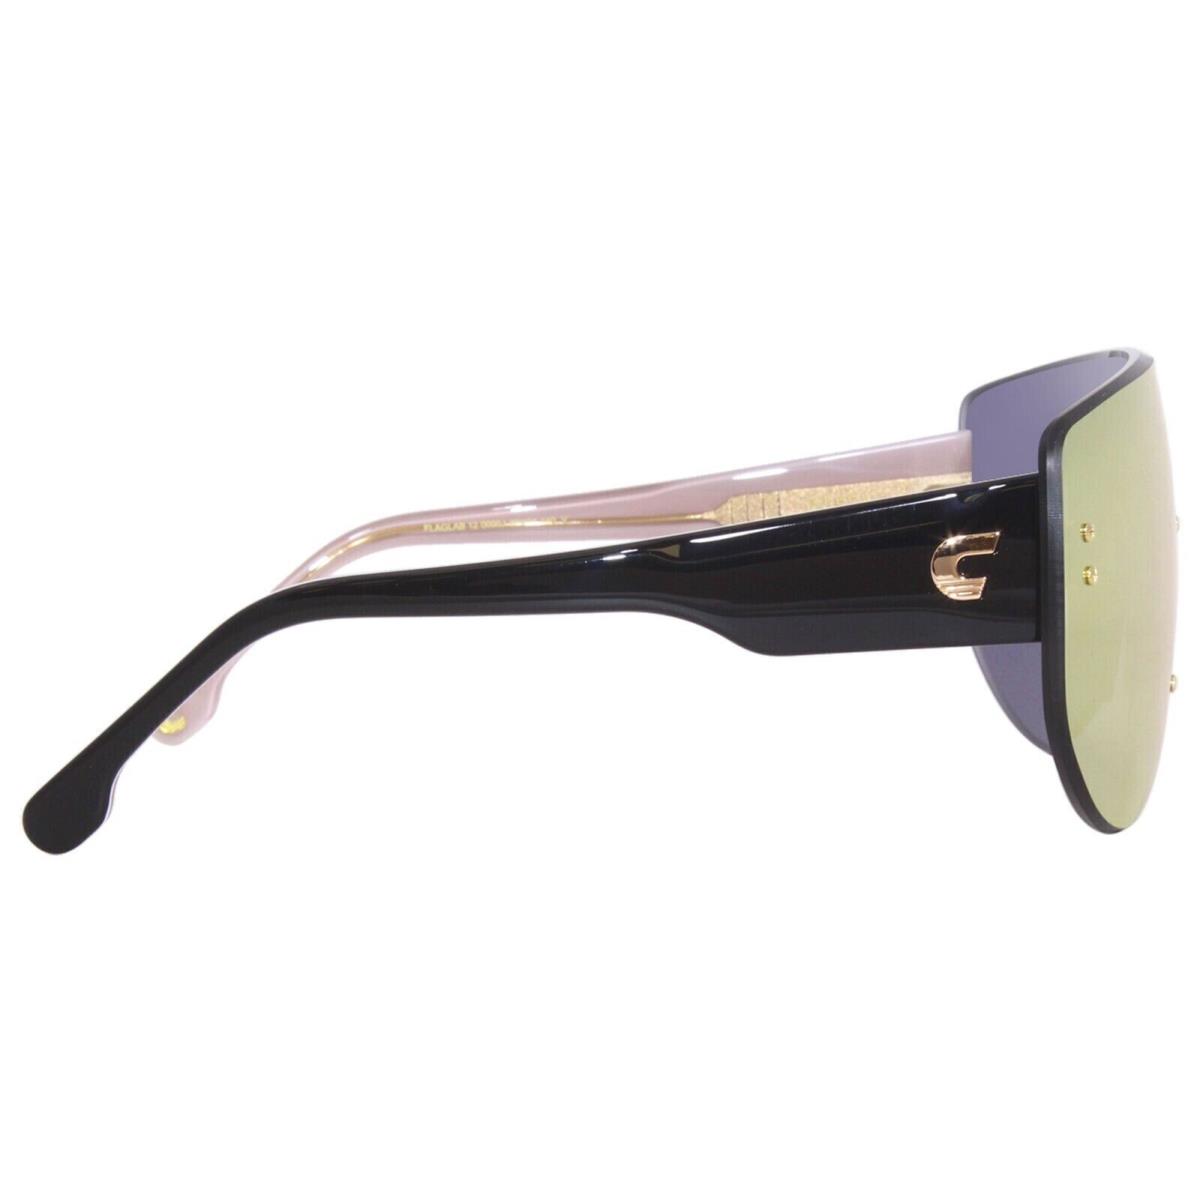 Carrera Flaglab 12 000 Special Edition Rose Gold Black Shield Unisex Sunglasses